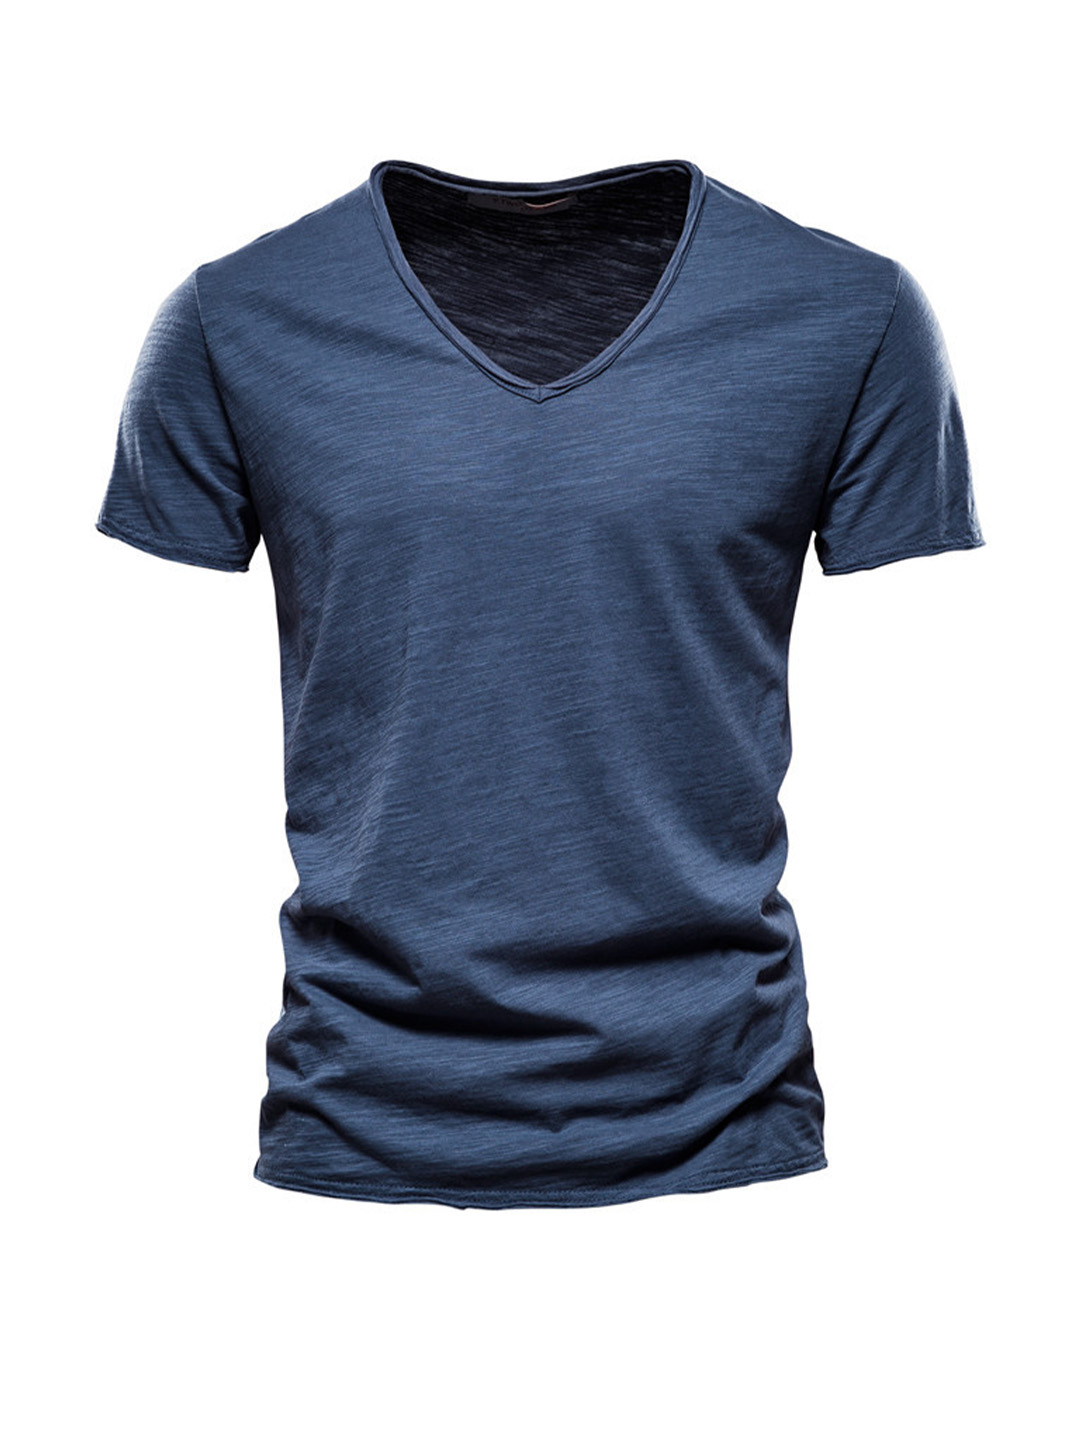 Poisonstreetwear Men's Textured Solid Color V-neck T-shirt-poisonstreetwear.com